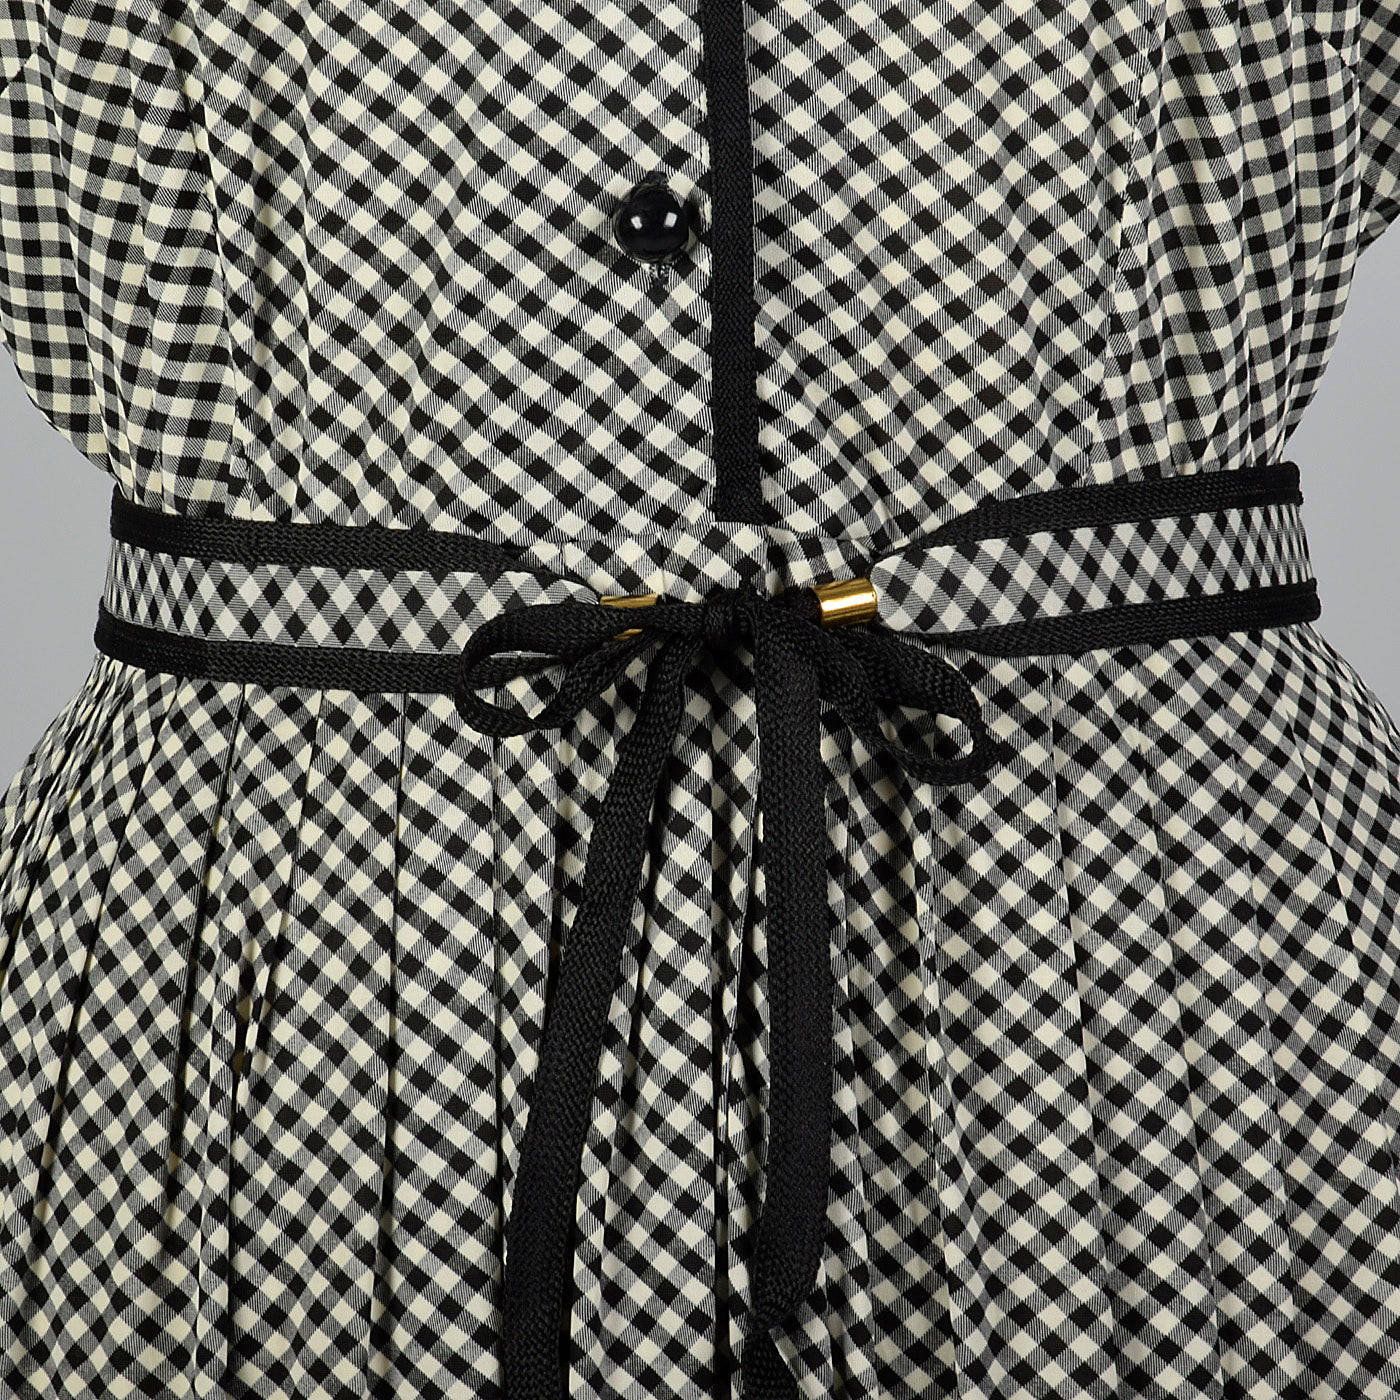 1950s Black and White Gingham Dress